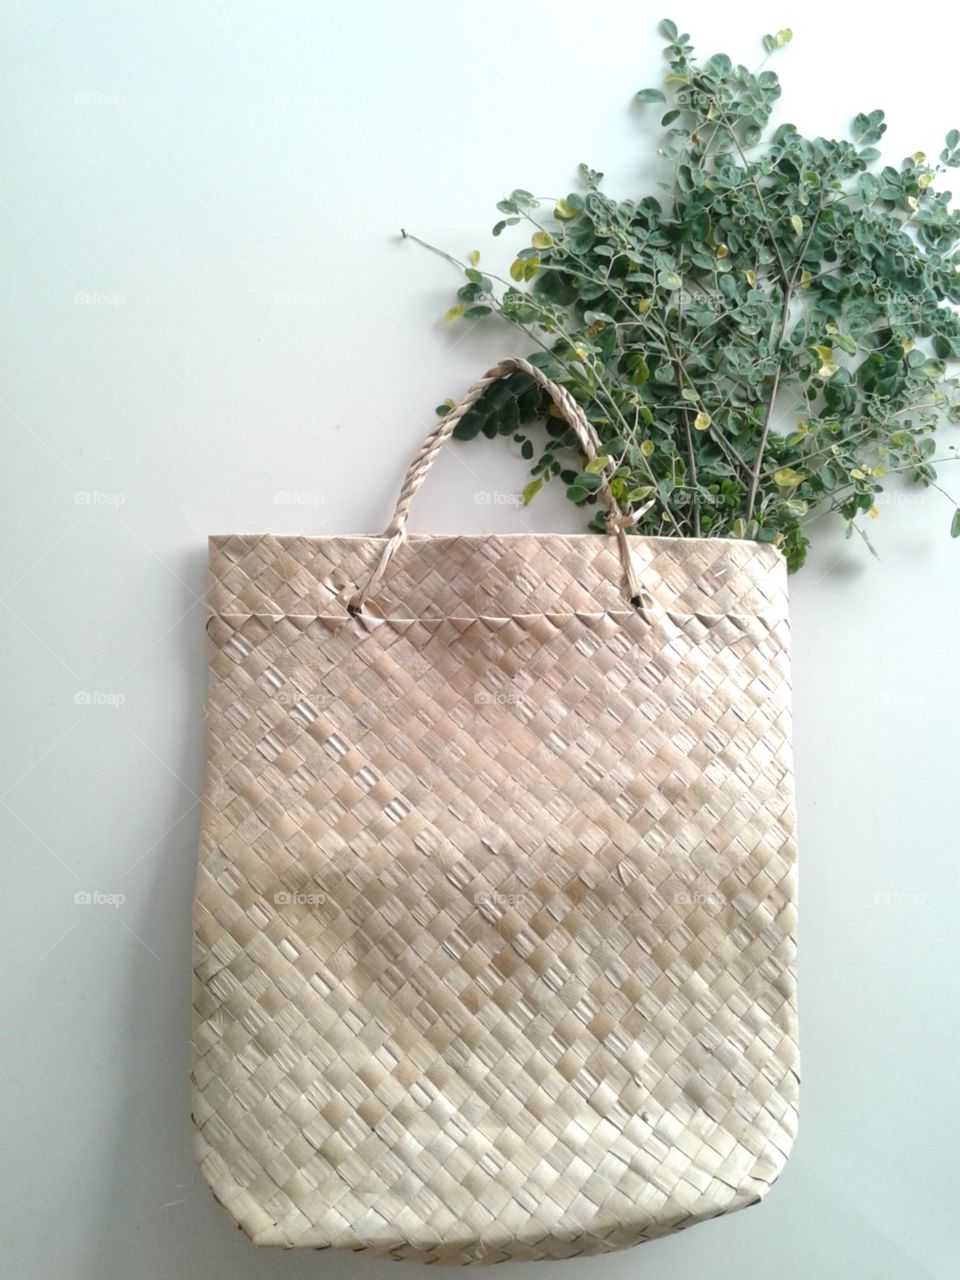 A native bag woven from buri palm leaves with horse raddish leaves(scientific name- moringa oleifera).